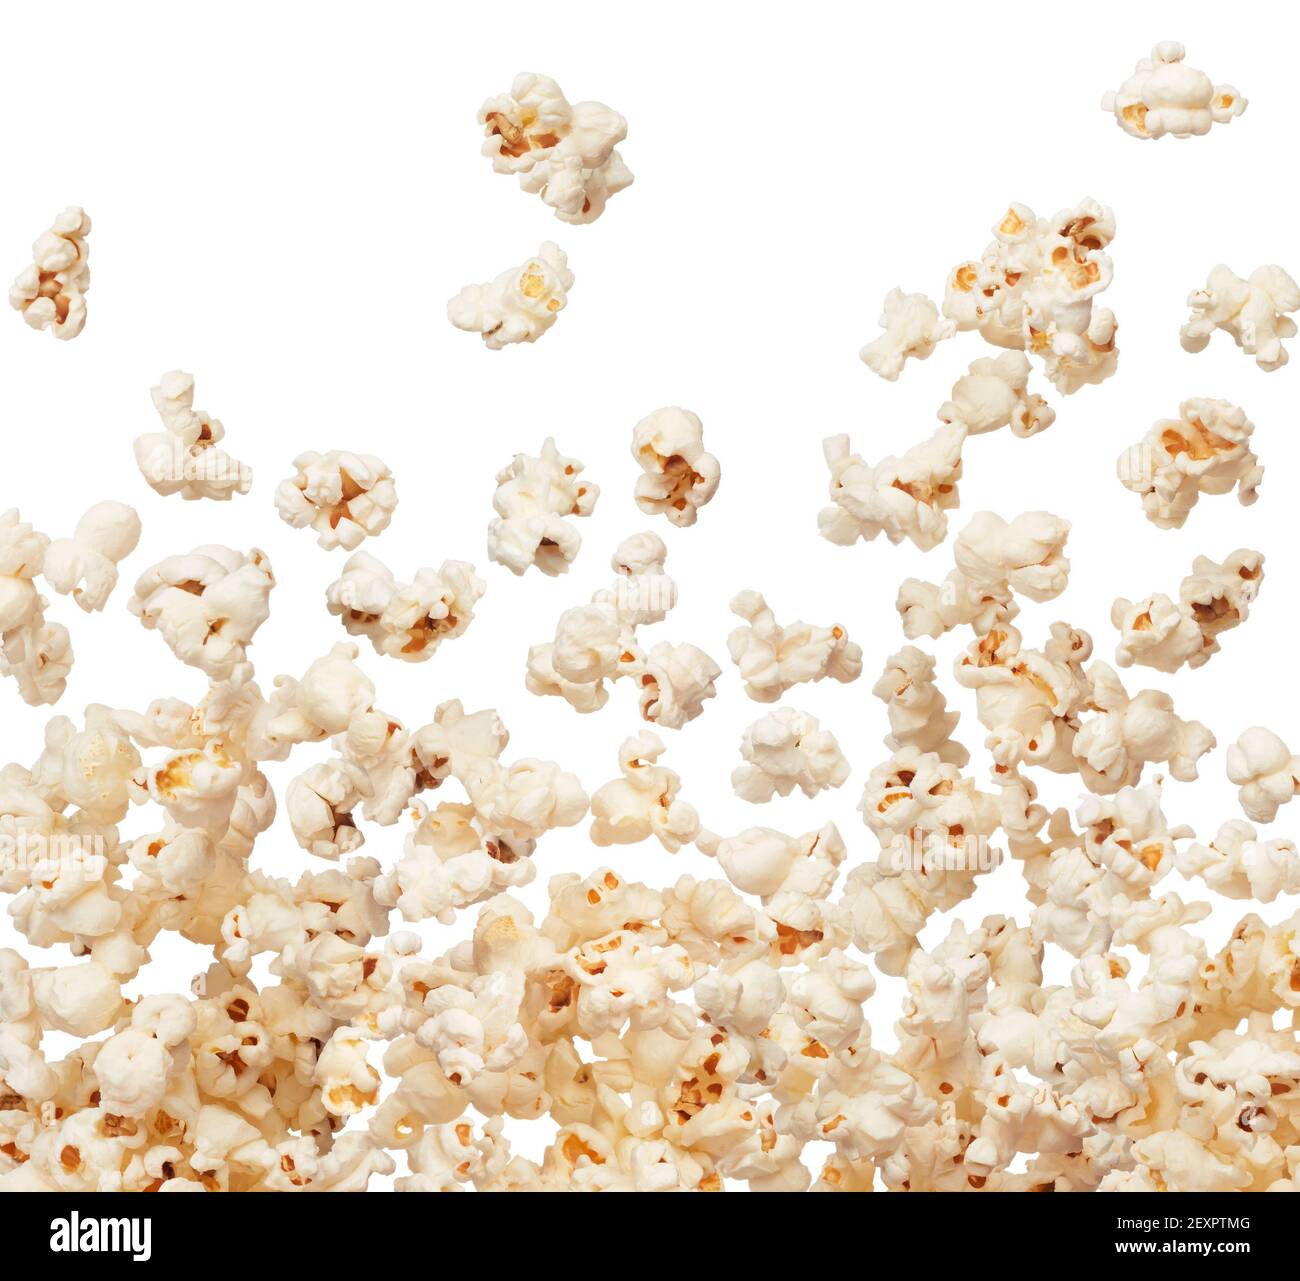 popcorn explode or splashing against white background Stock Photo